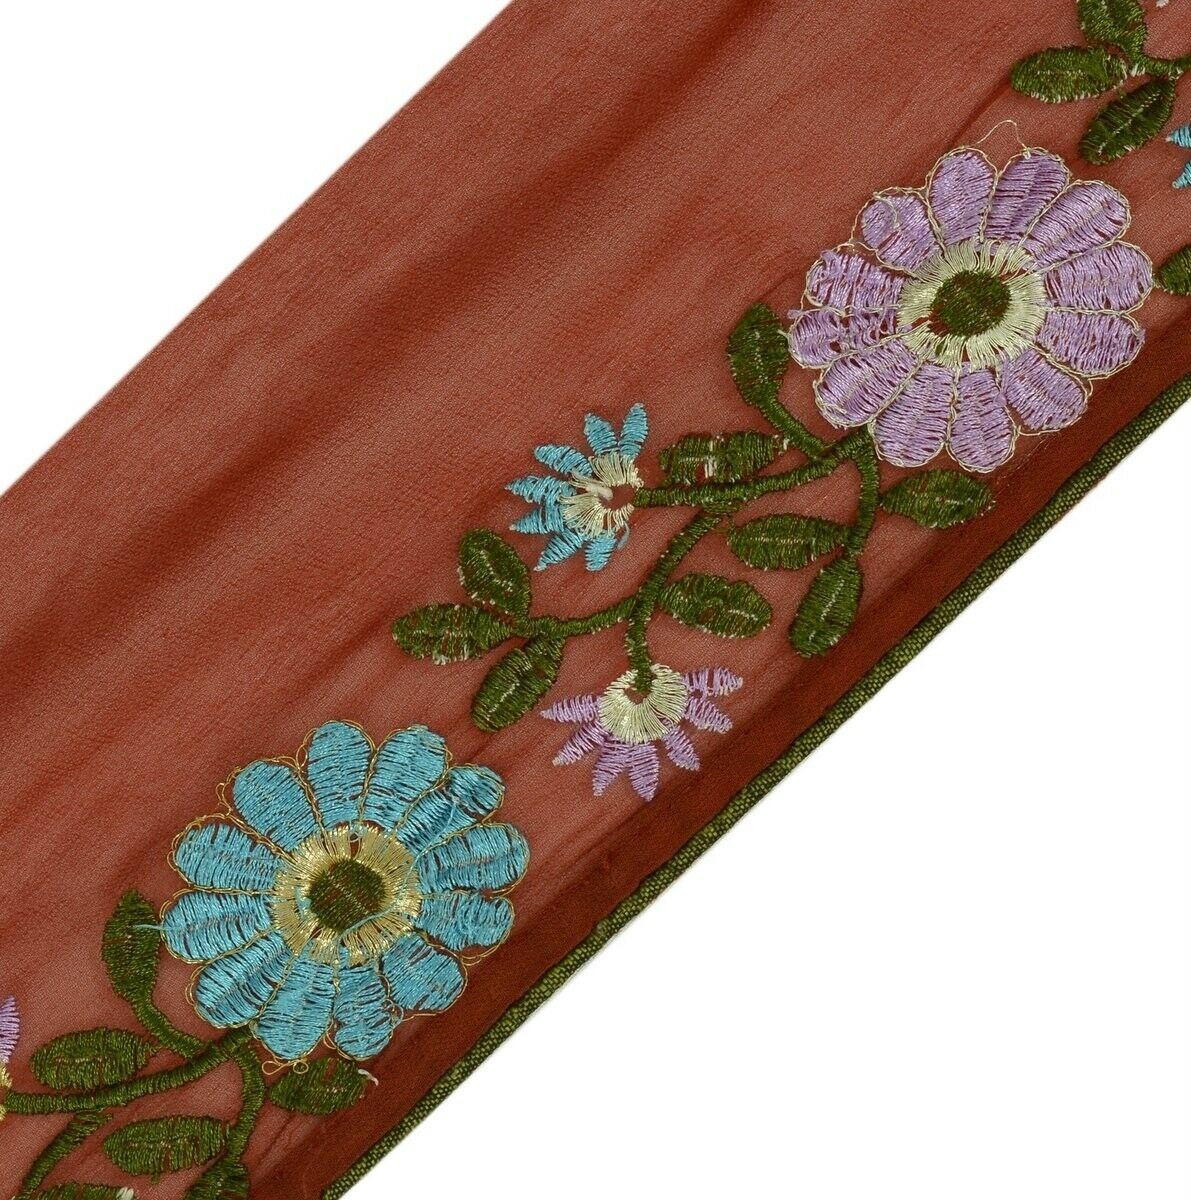 Vintage Sari Border Indian Craft Trim Antique Embroidered Ribbon Lace Maroon